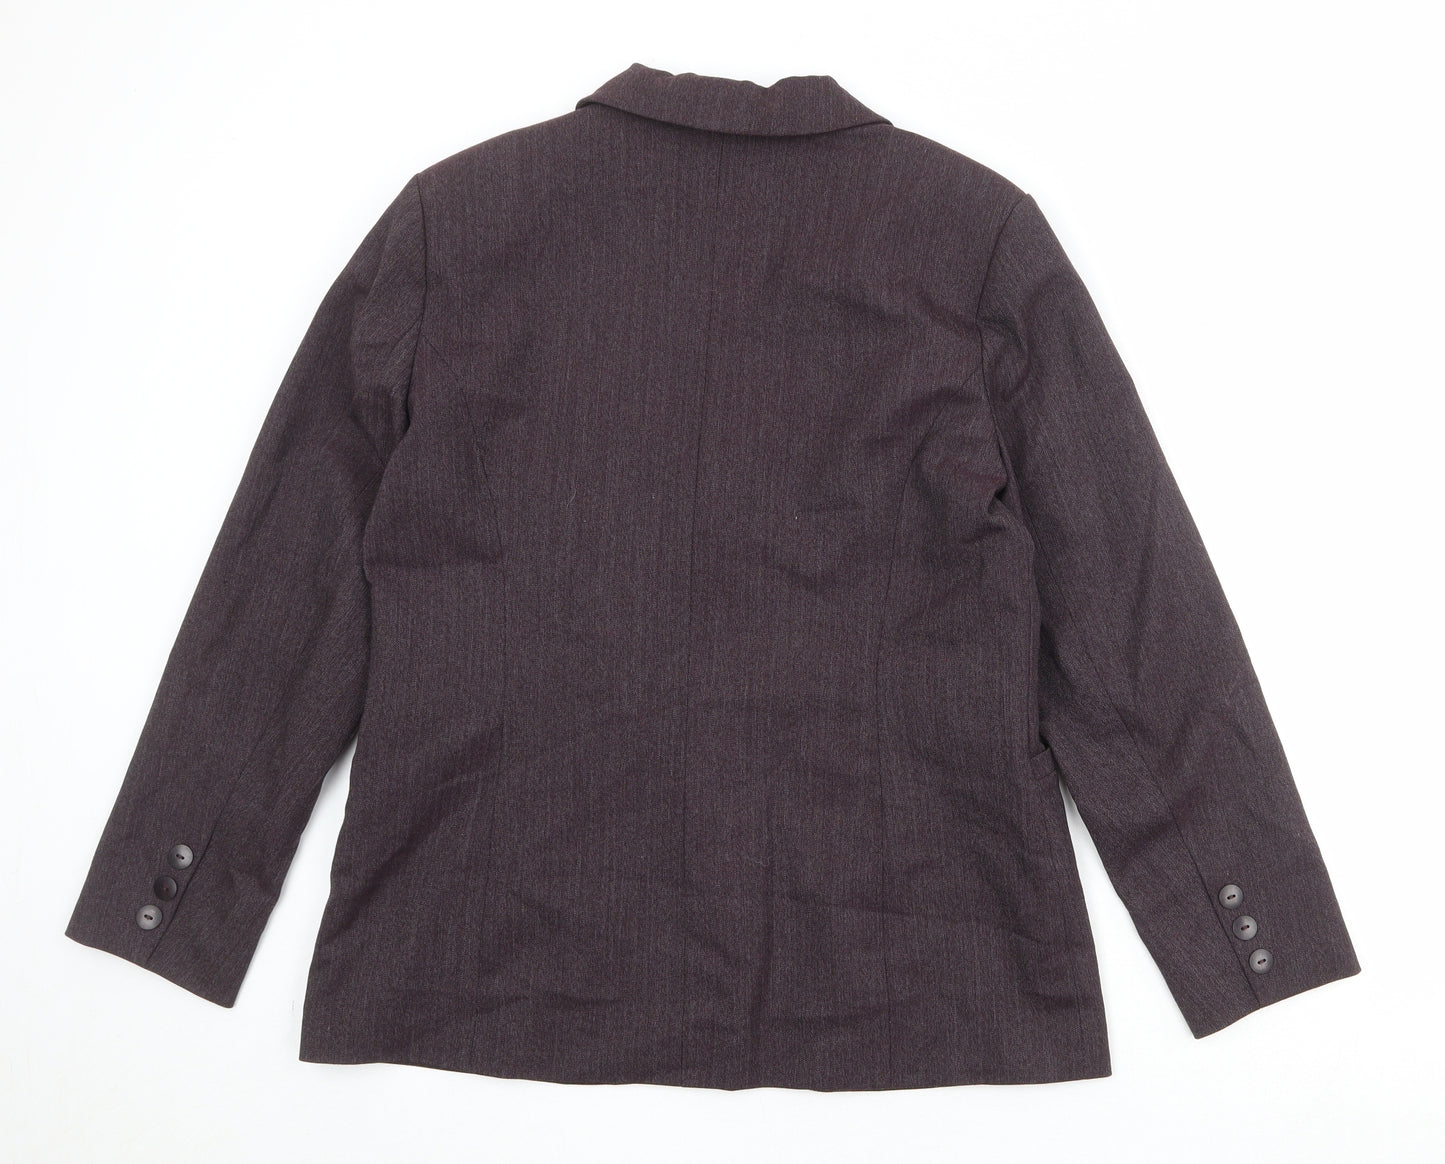 Damart Womens Purple Polyester Jacket Suit Jacket Size 18